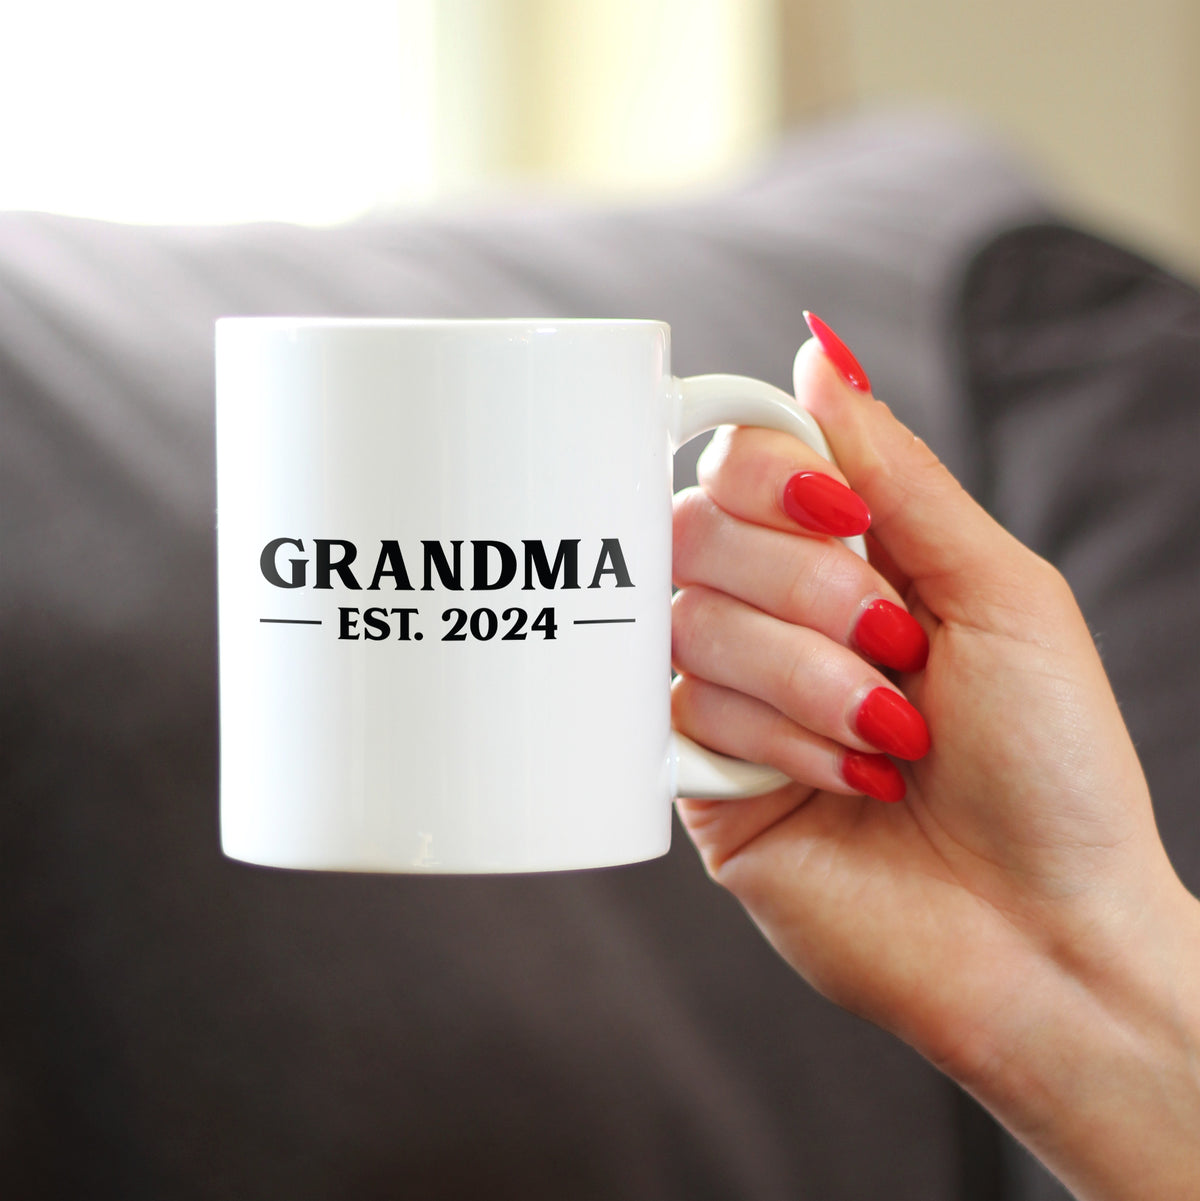 Grandma Est 2024 - New Grandmother Coffee Mug Gift for First Time Grandparents - Bold